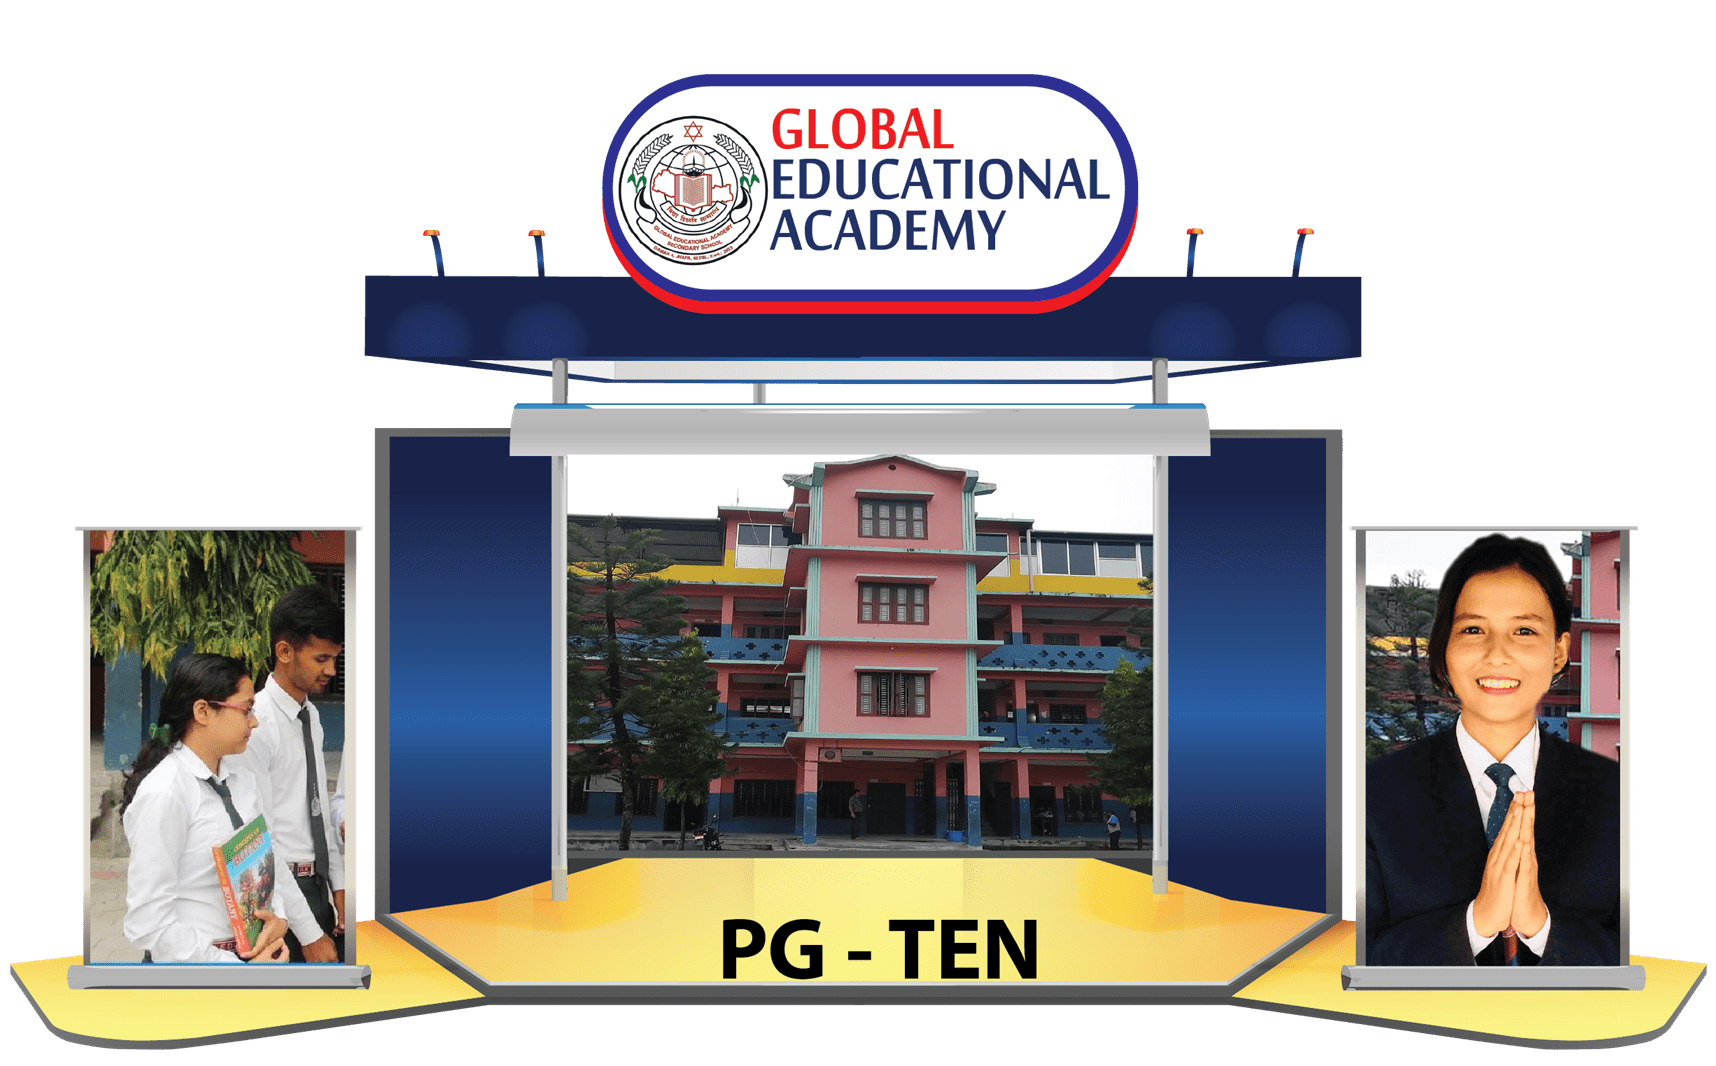 Global Educational Academy